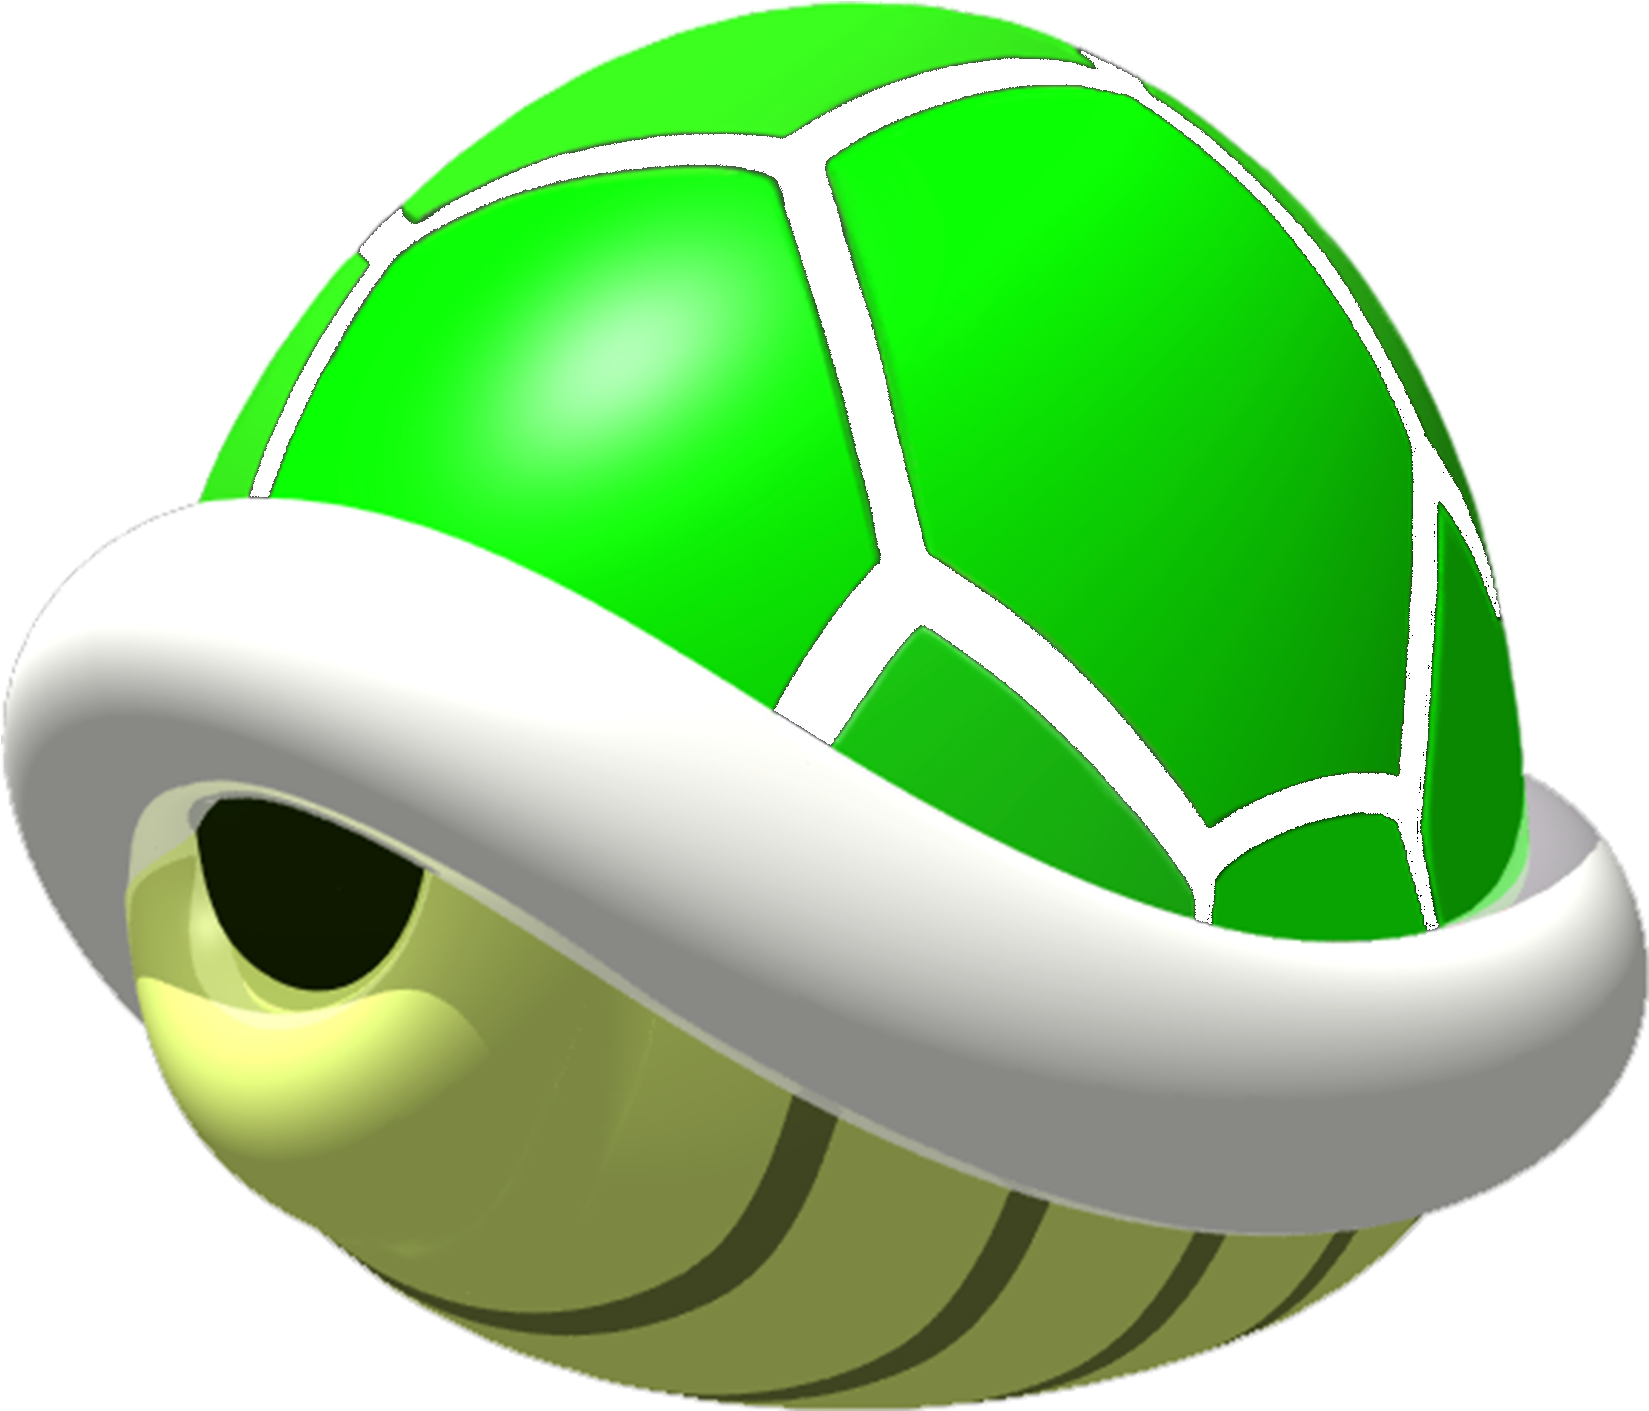 Mario Kart 64 - Mario Kart 64 Green Shell (1660x1428)